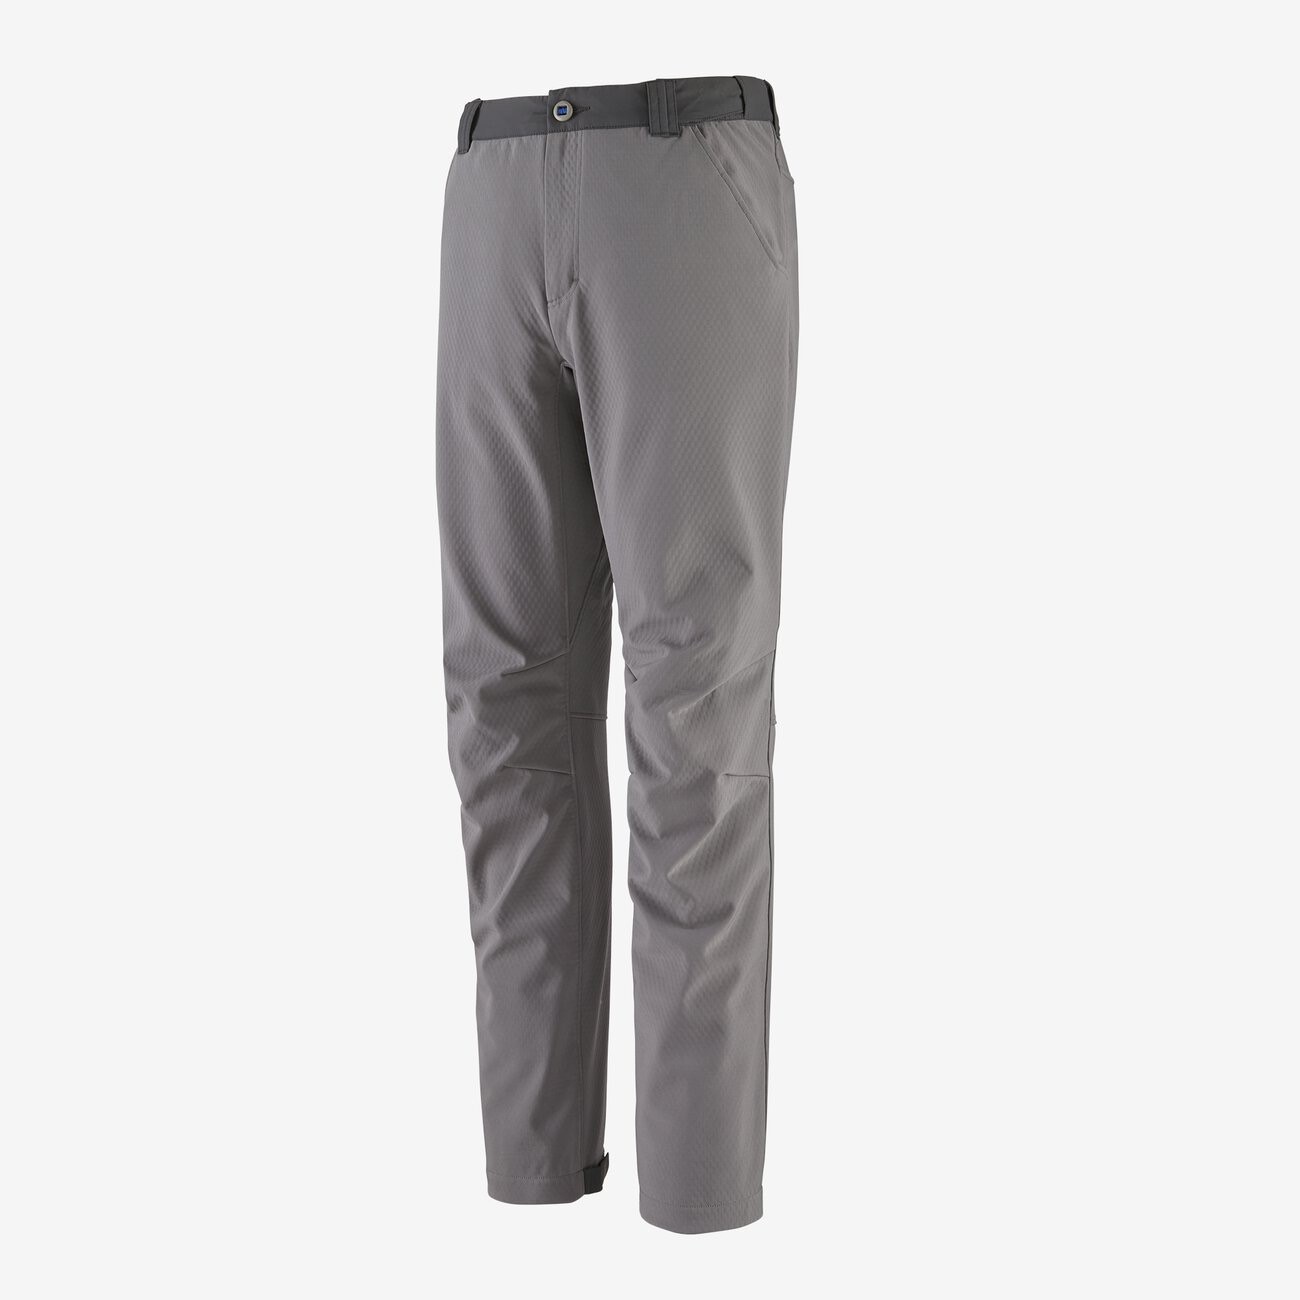 Patagonia M's Shelled Insulator Pants - Noble Grey - Medium